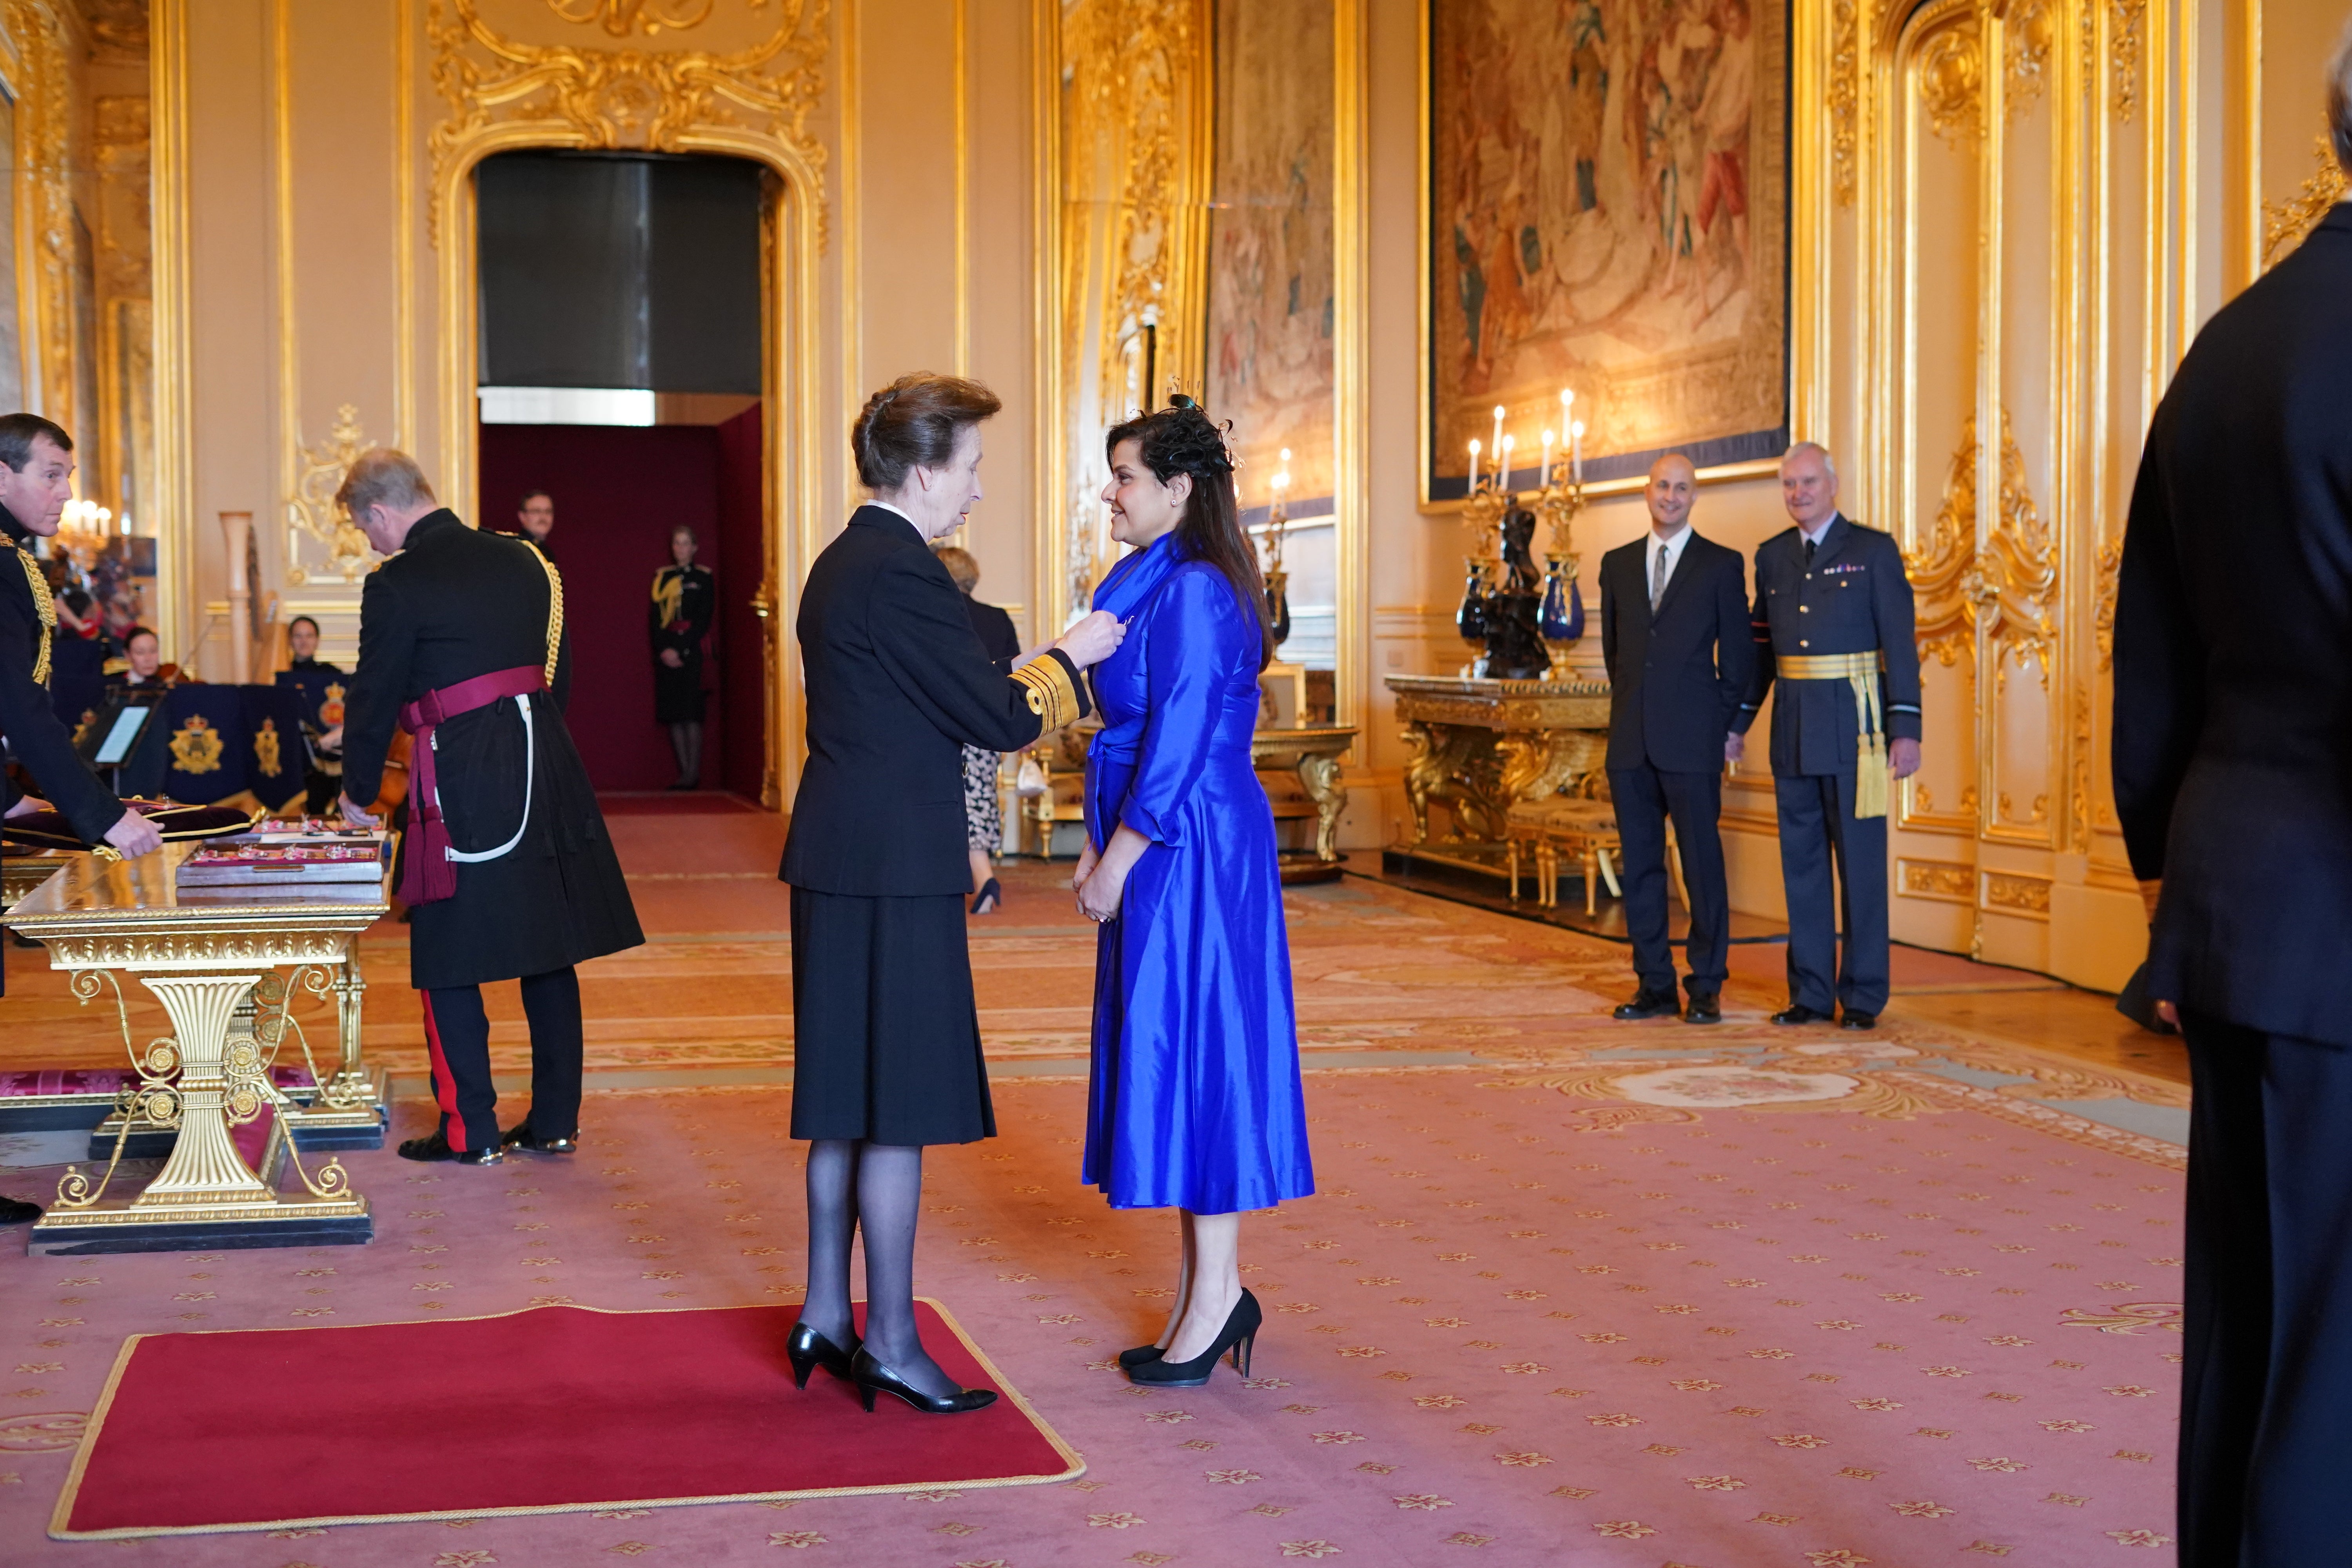 Nina Wadia is made an OBE by the Princess Royal at Windsor Castle (Jonathan Brady/PA)